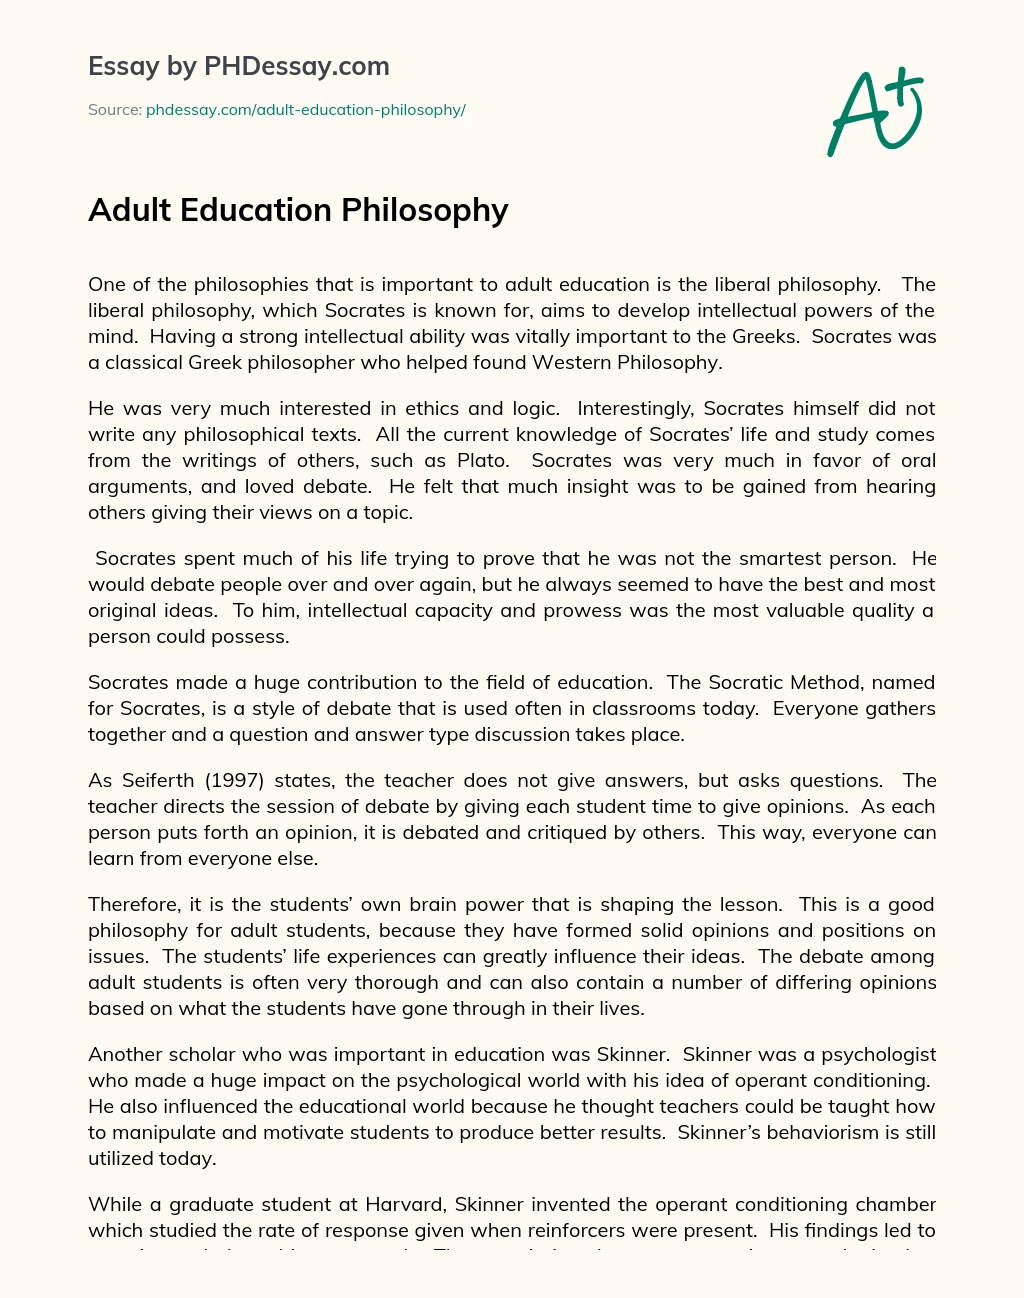 Adult Education Philosophy - PHDessay.com